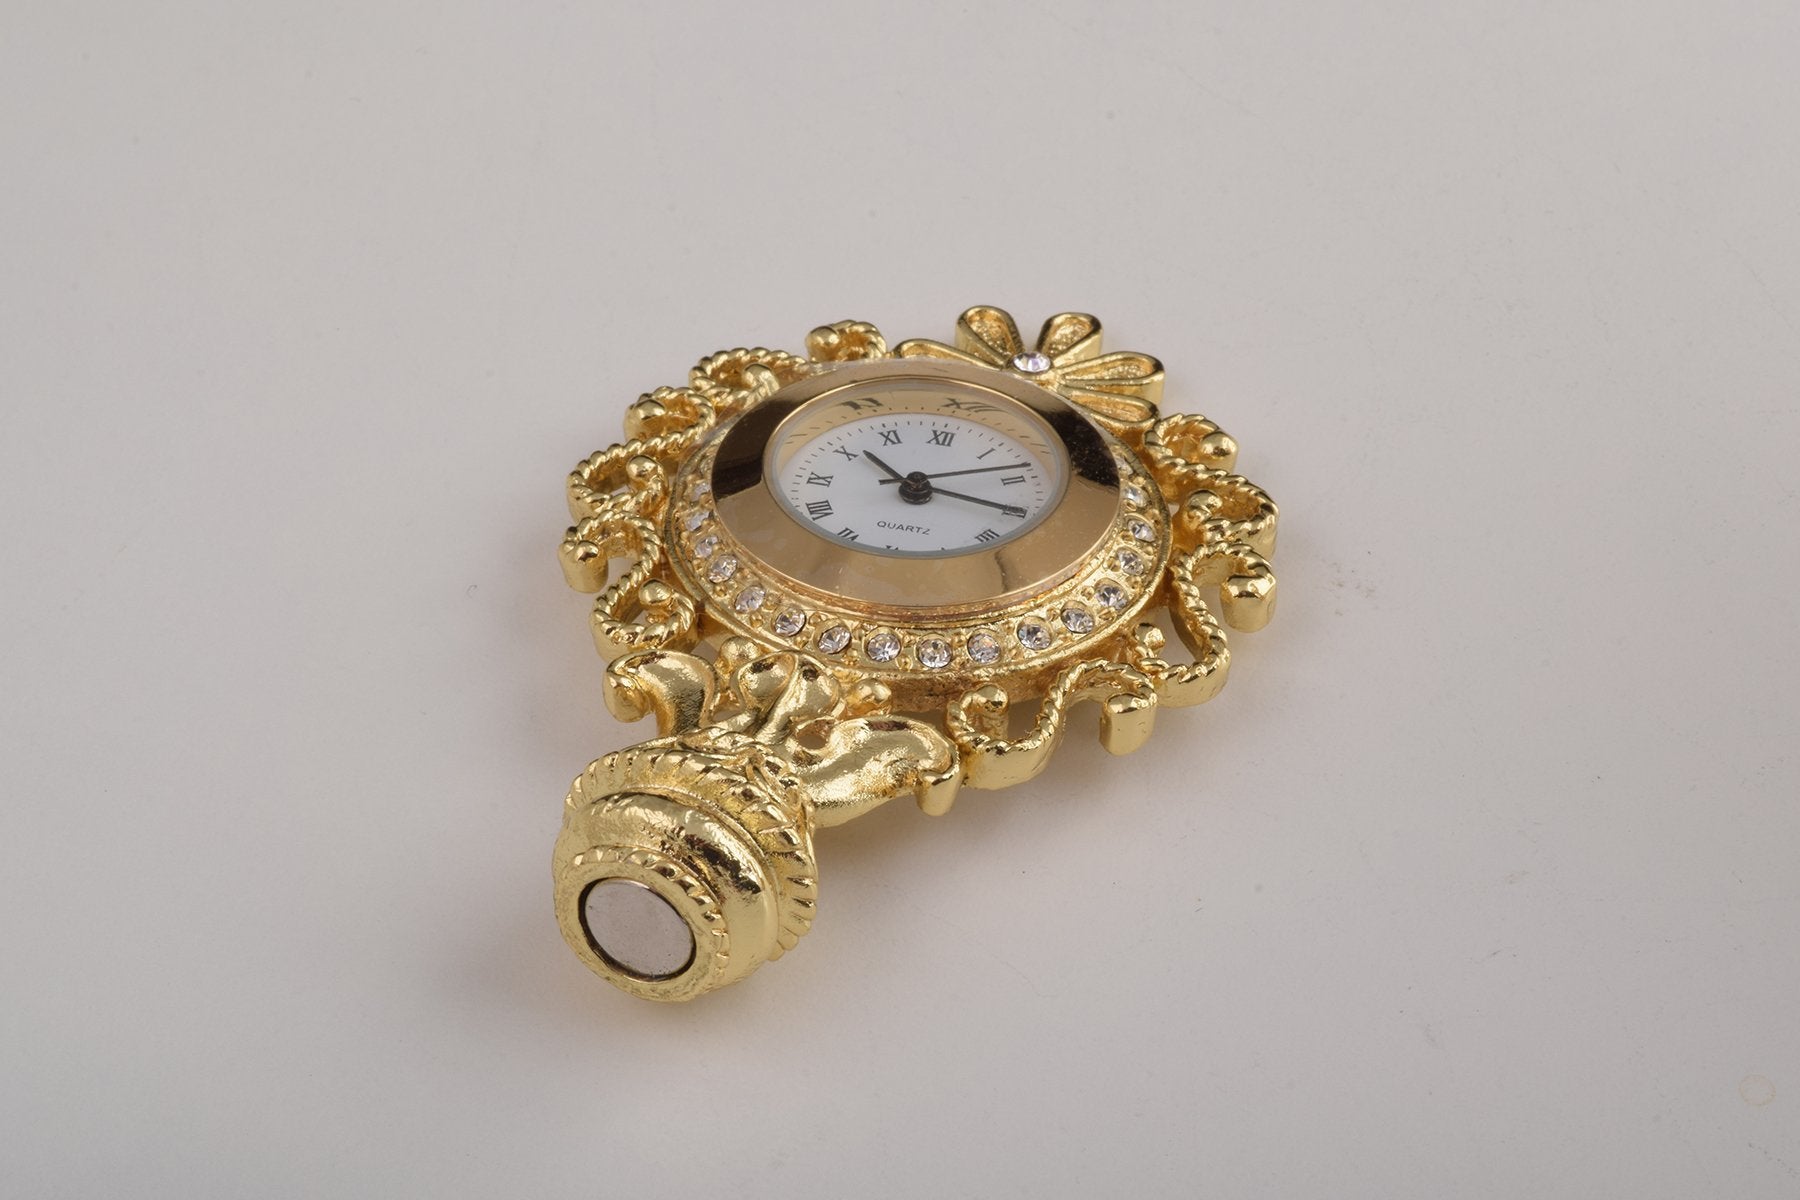 Keren Kopal Gold Faberge Egg with Clock Inside  119.00